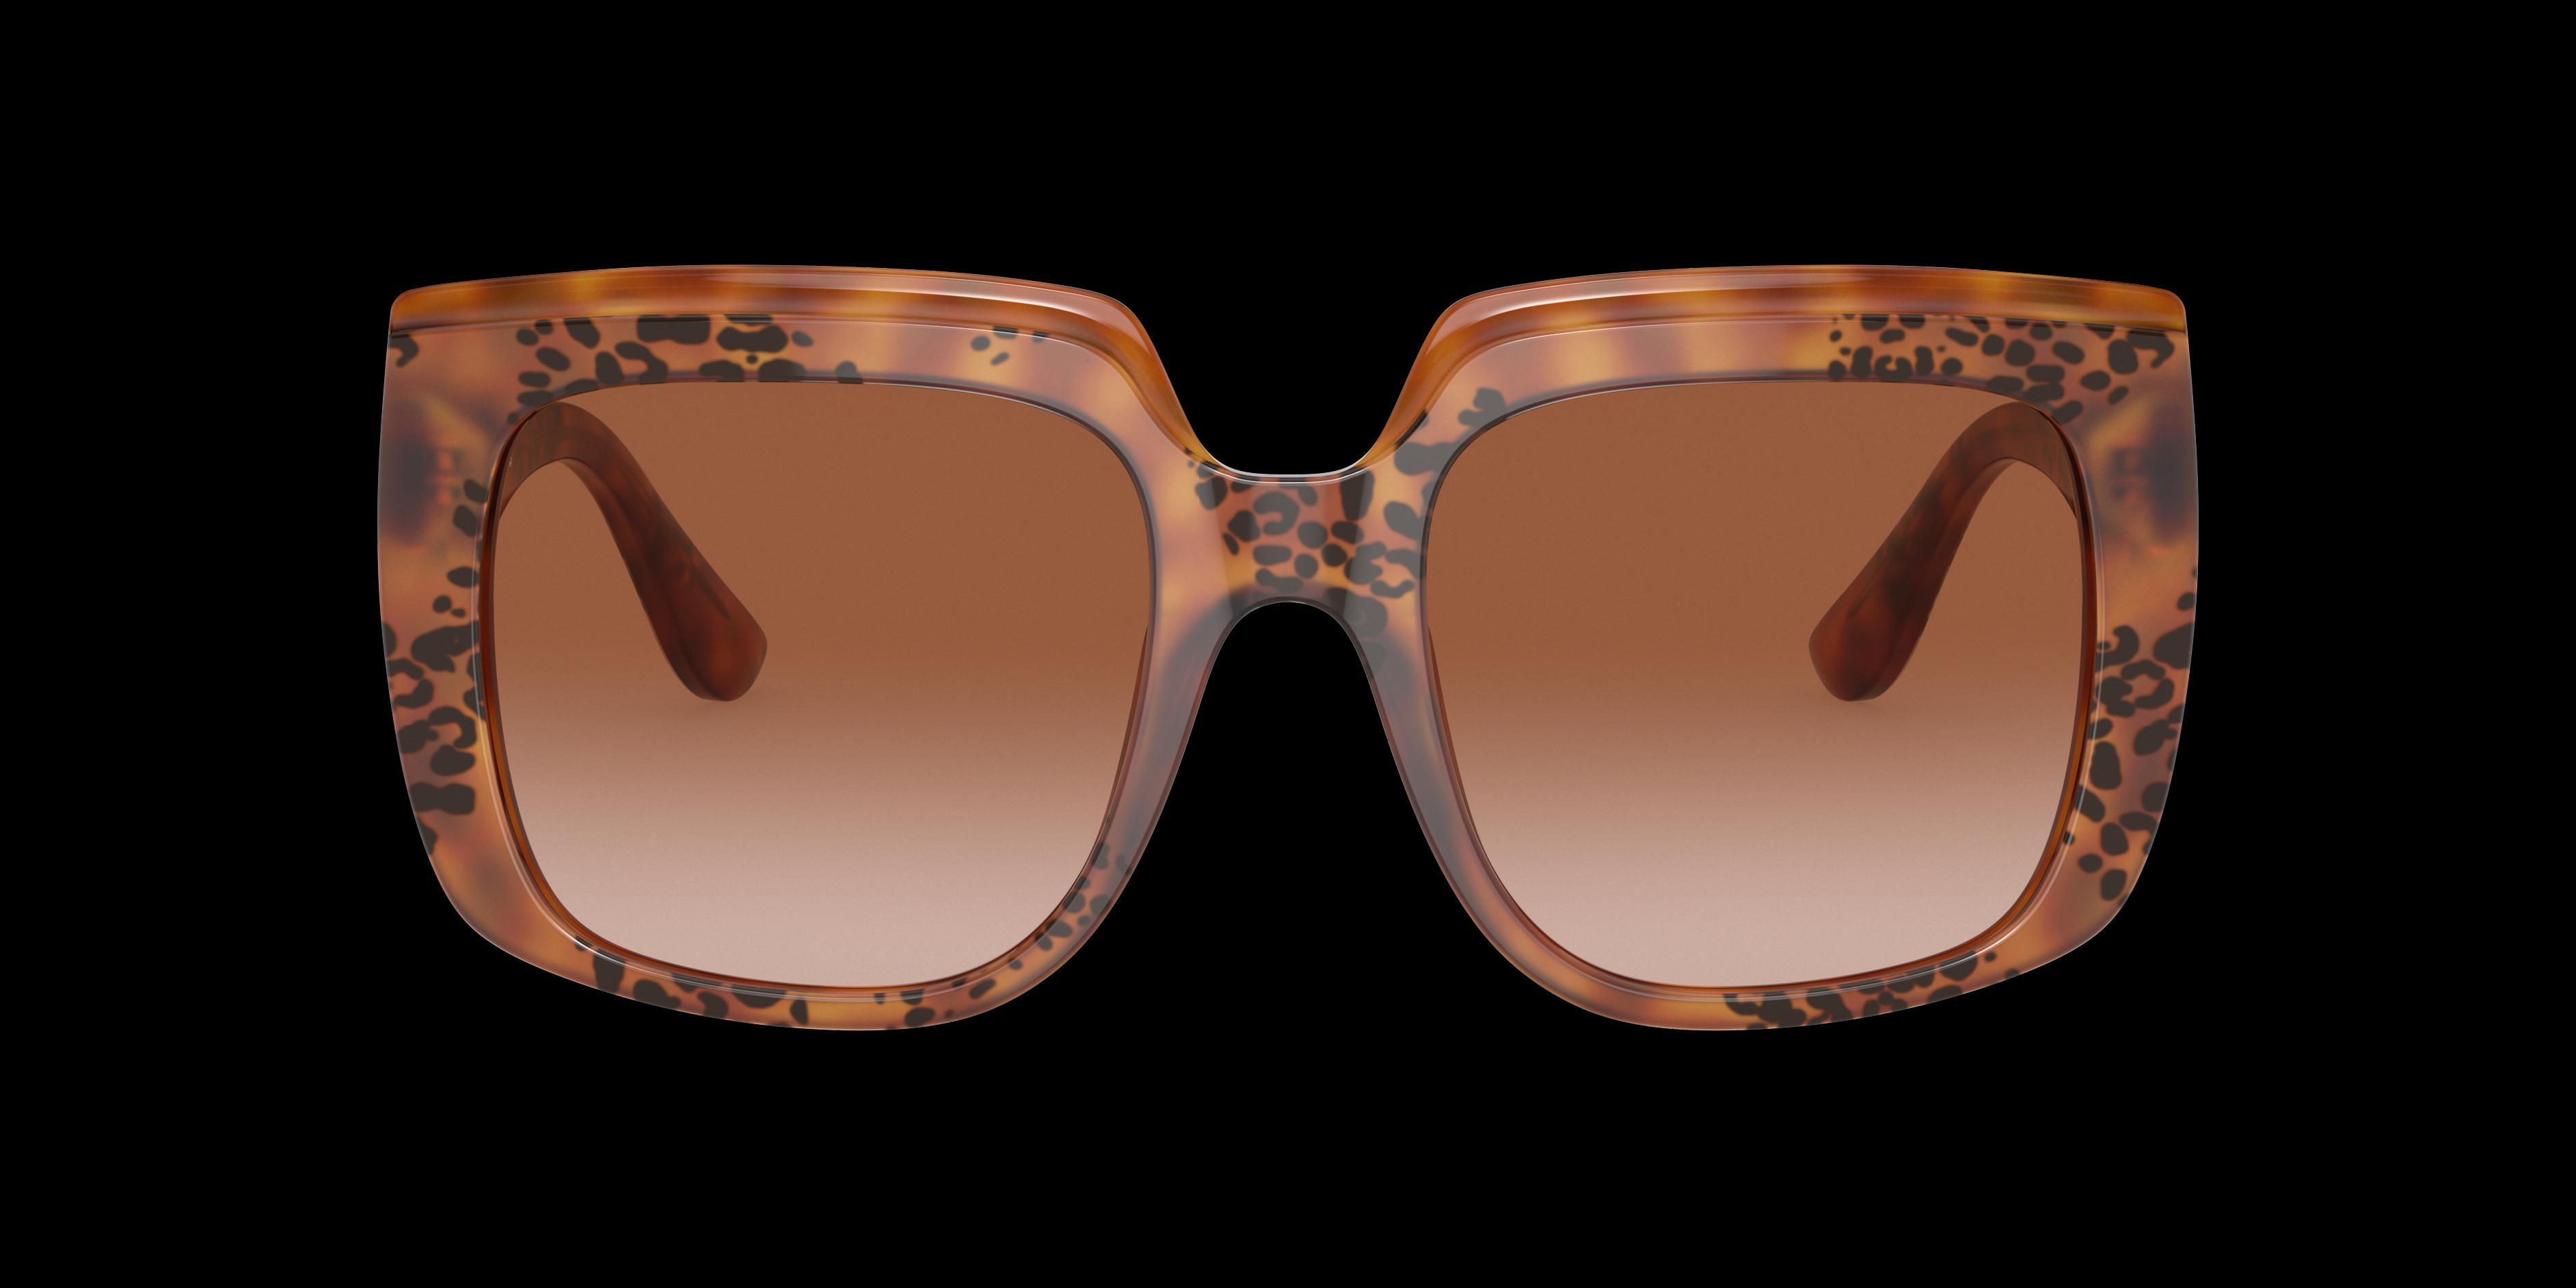 Dolce & Gabbana 54mm Gradient Square Sunglasses Product Image